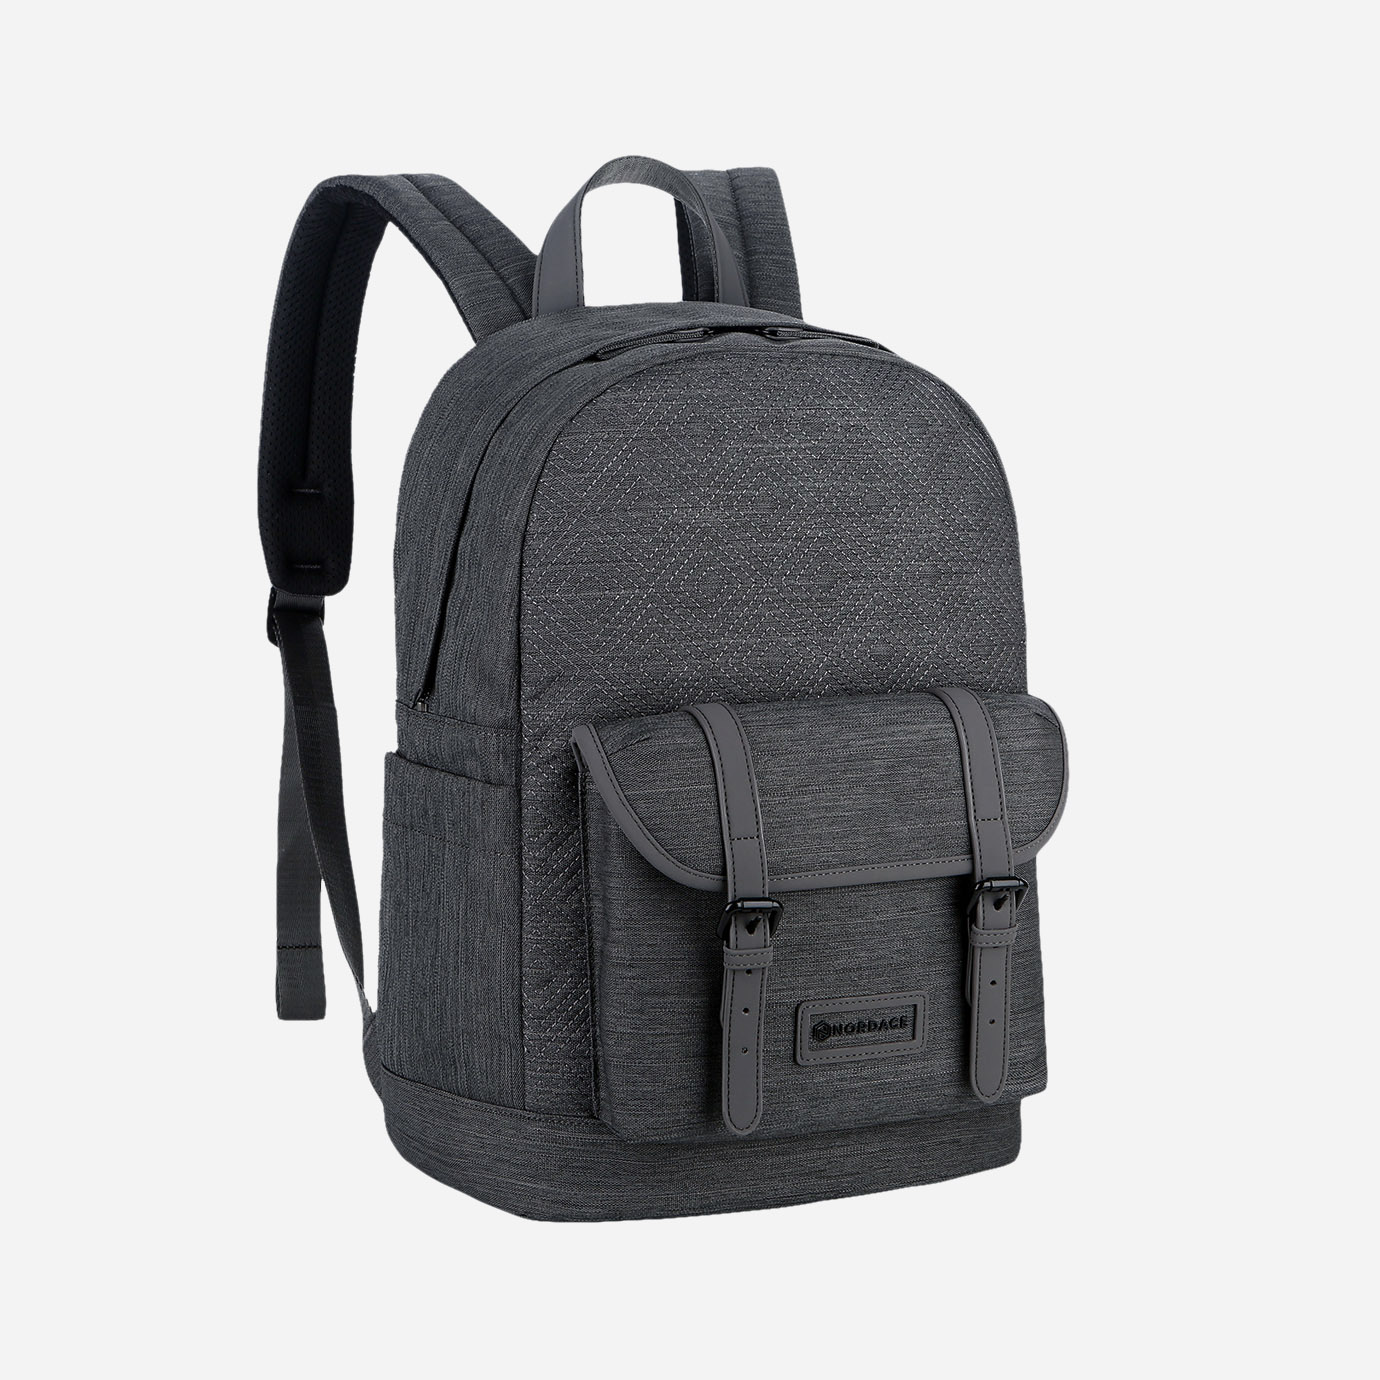 Nordace Backpacks | Comino Classic Backpack-Charcoal